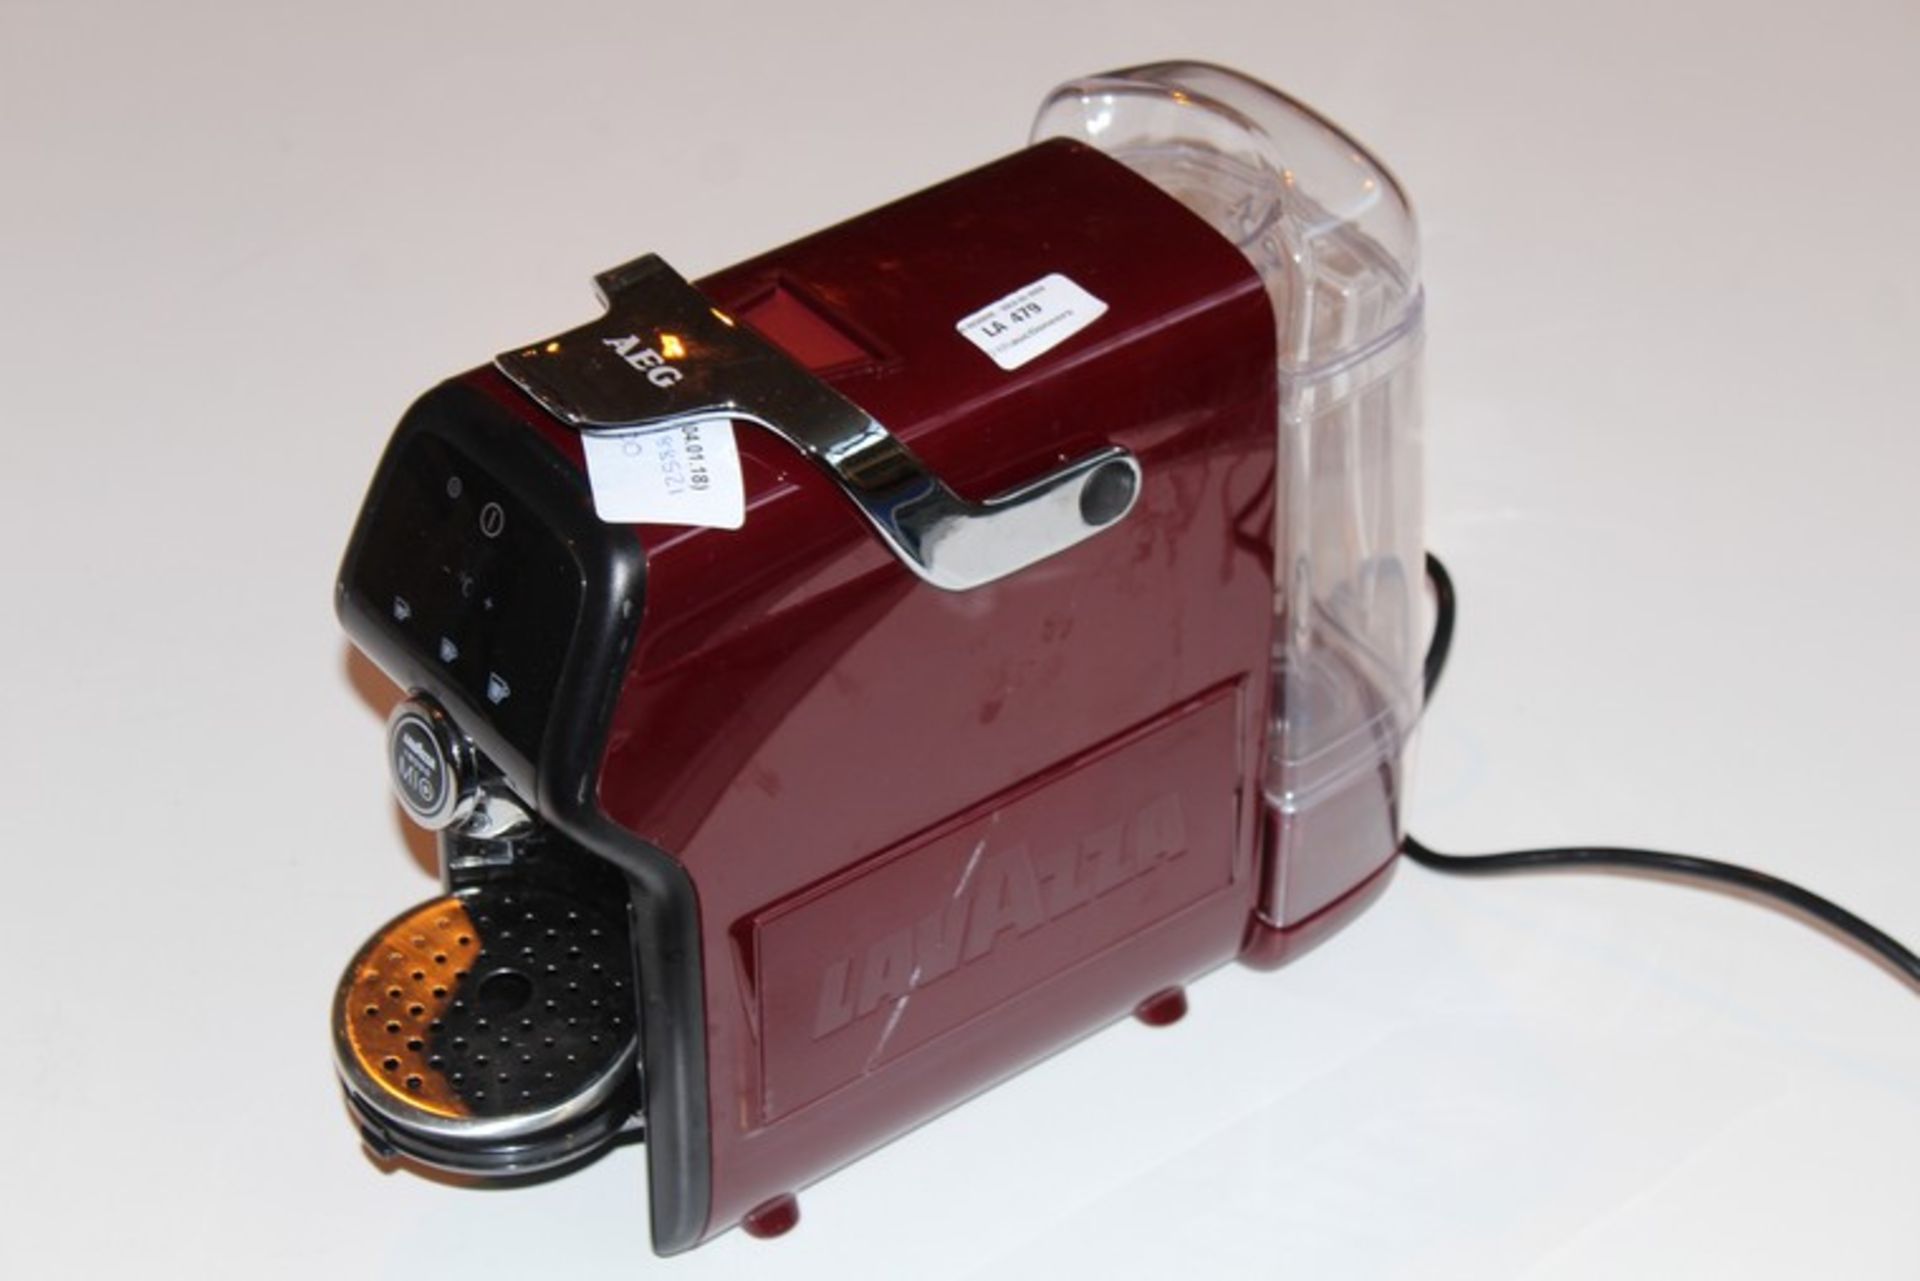 1 x AEG MAGIA CAPPUCCINO COFFEE MACHINE RRP £50 (04.01.18) (4788521) *PLEASE NOTE THAT THE BID PRICE